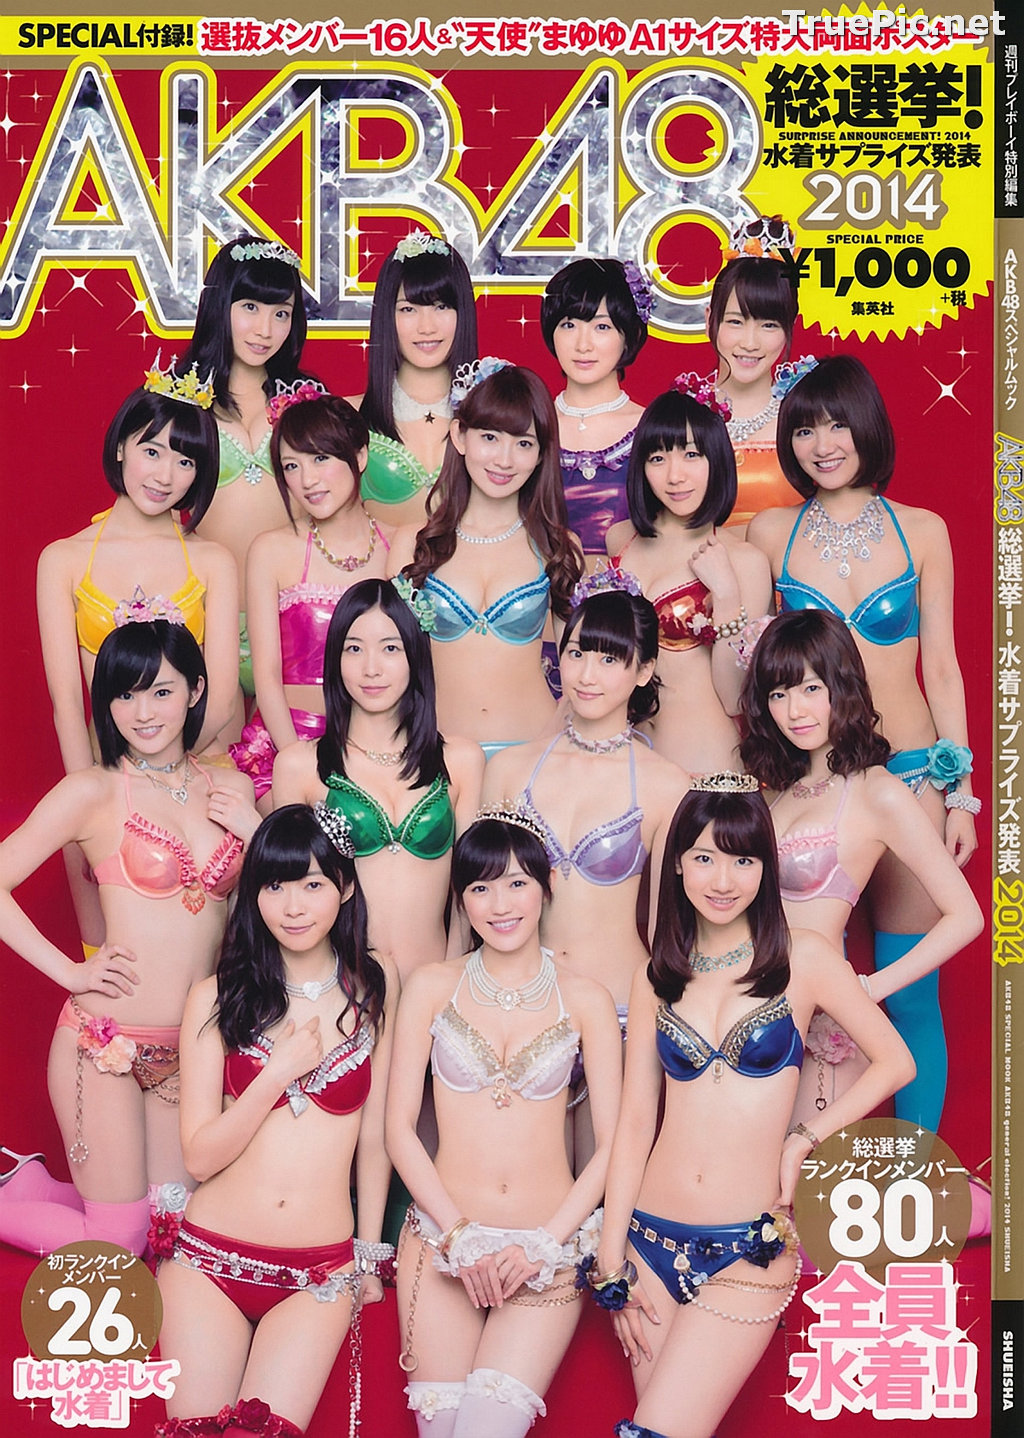 Image AKB48 General Election! Swimsuit Surprise Announcement 2014 - TruePic.net - Picture-1